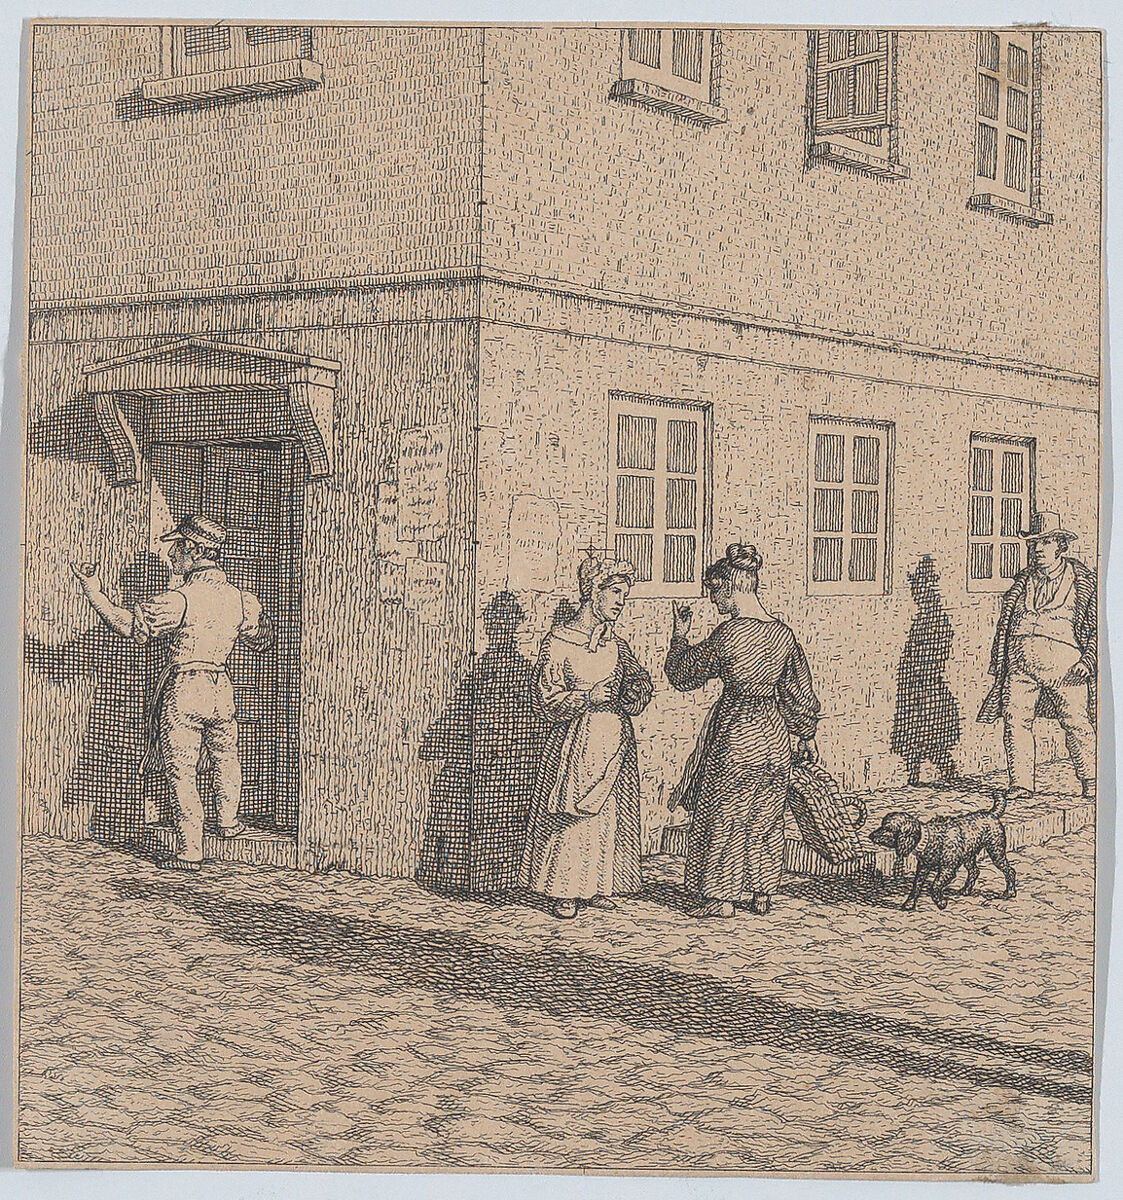 Two women conversing on a street corner, from "Linear Perspective, Applied to the Art of Painting", Christoffer Wilhelm Eckersberg (Danish, Blåkrog 1783–1853 Copenhagen), Etching 